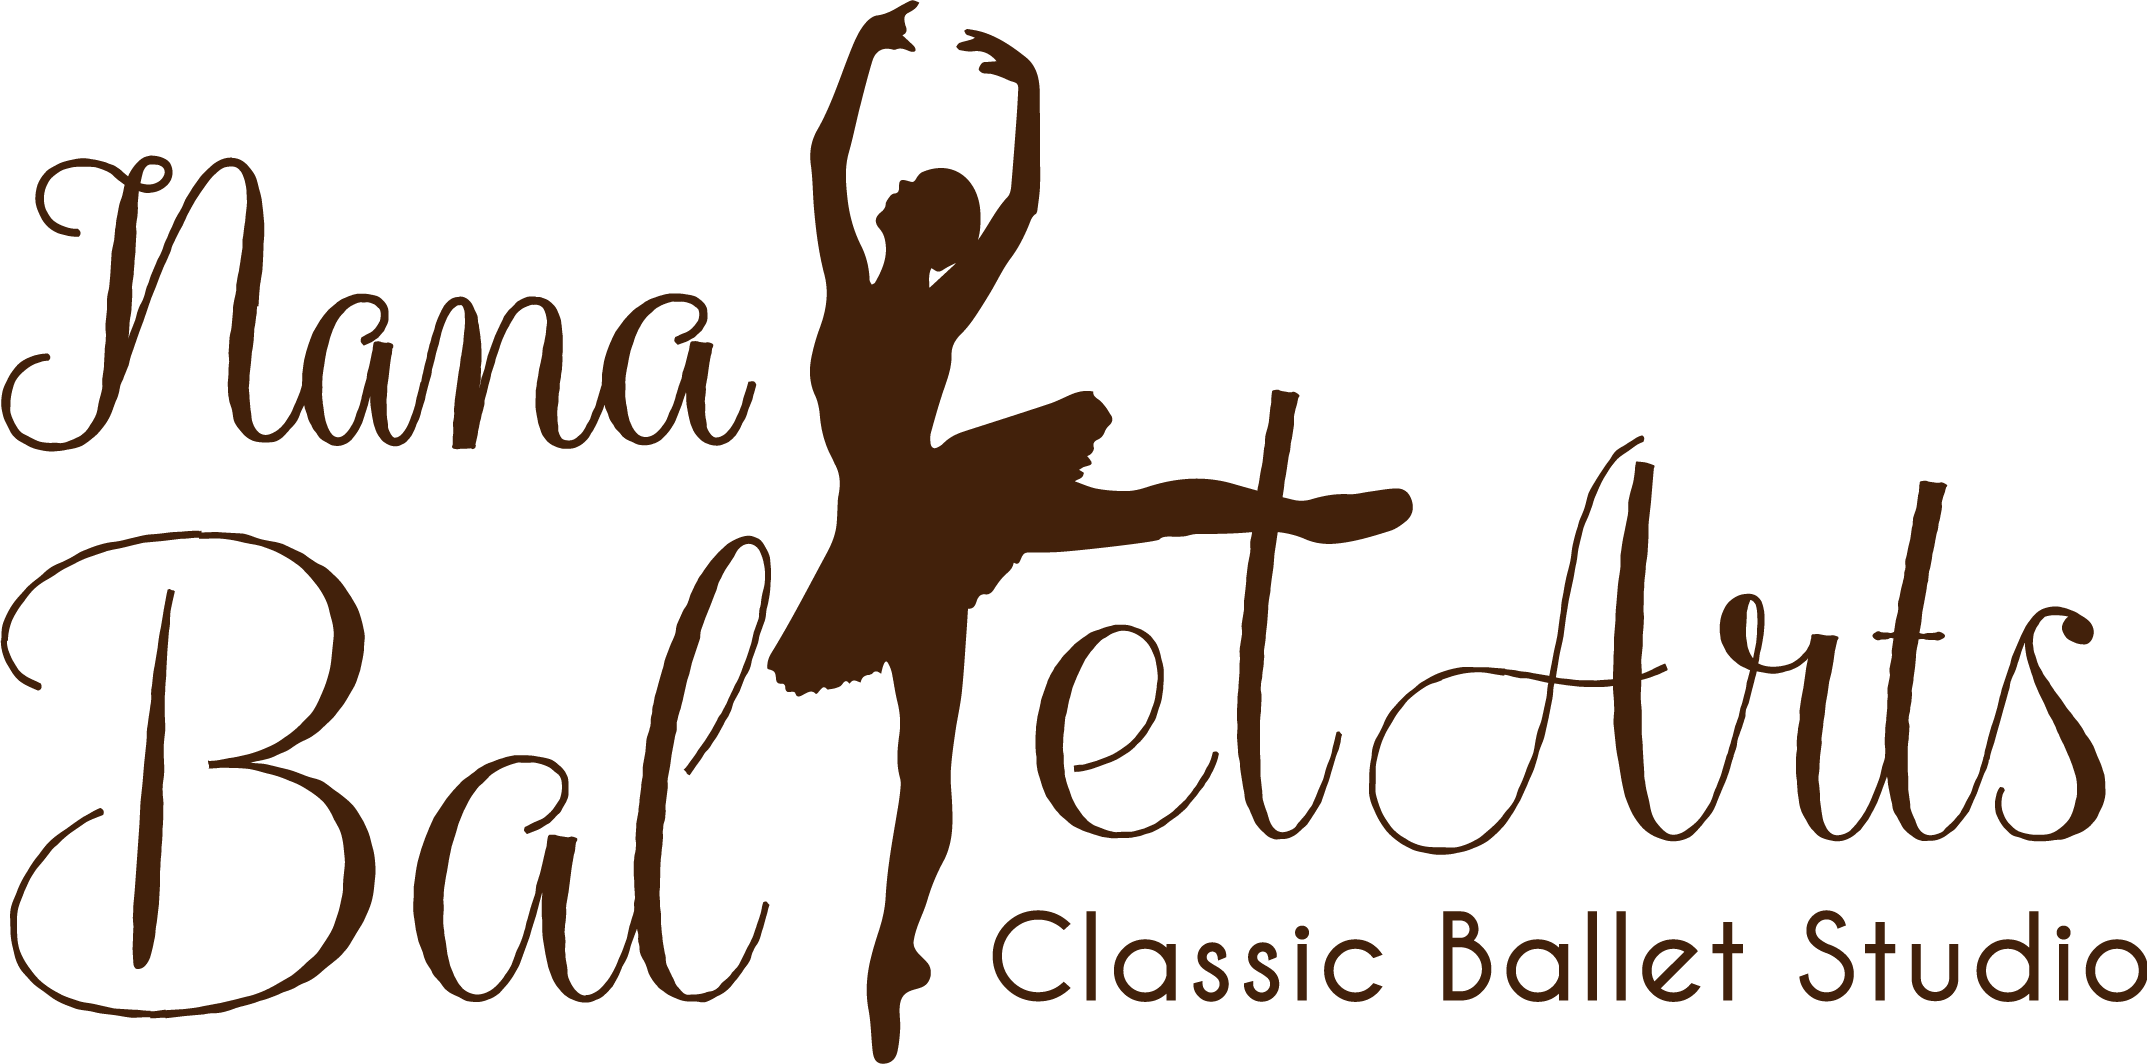 Nana Ballet Arts